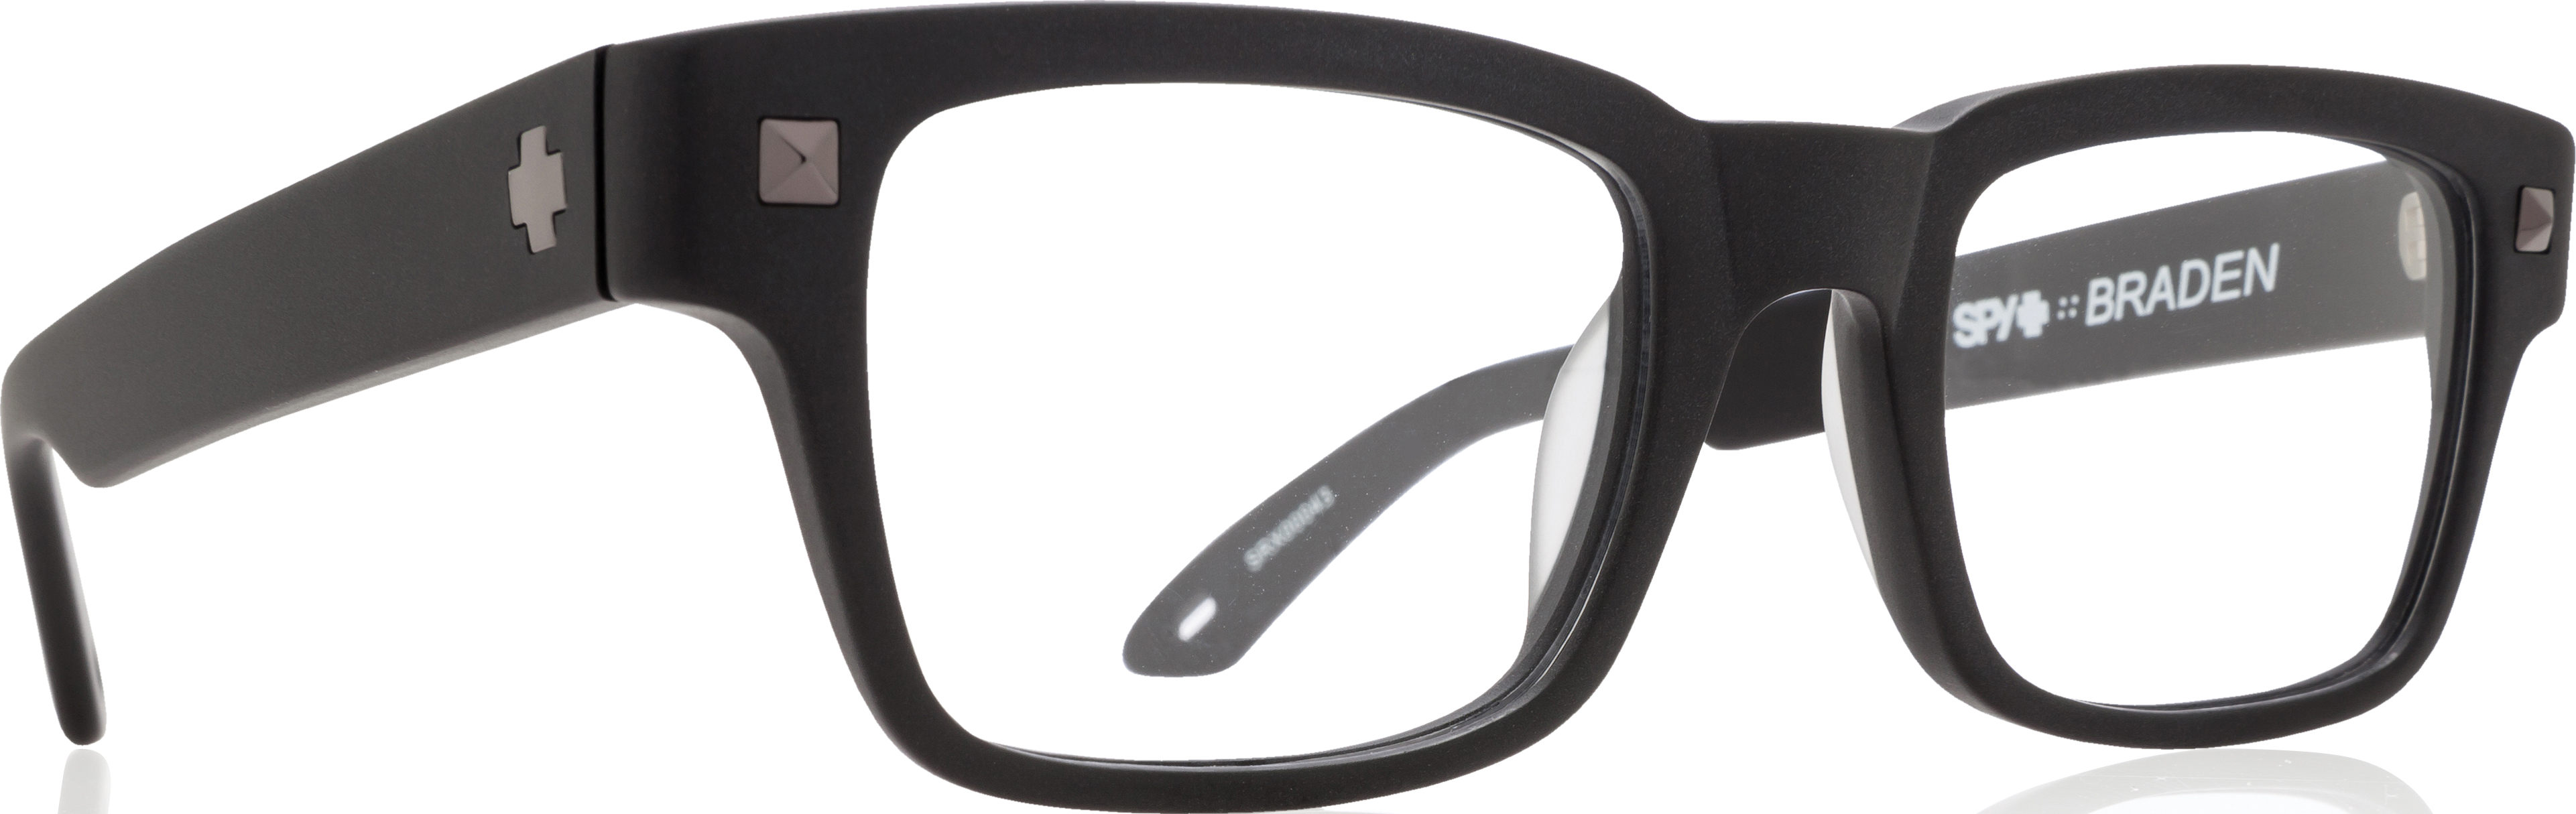 Picture of Spy Eyeglasses BRADEN